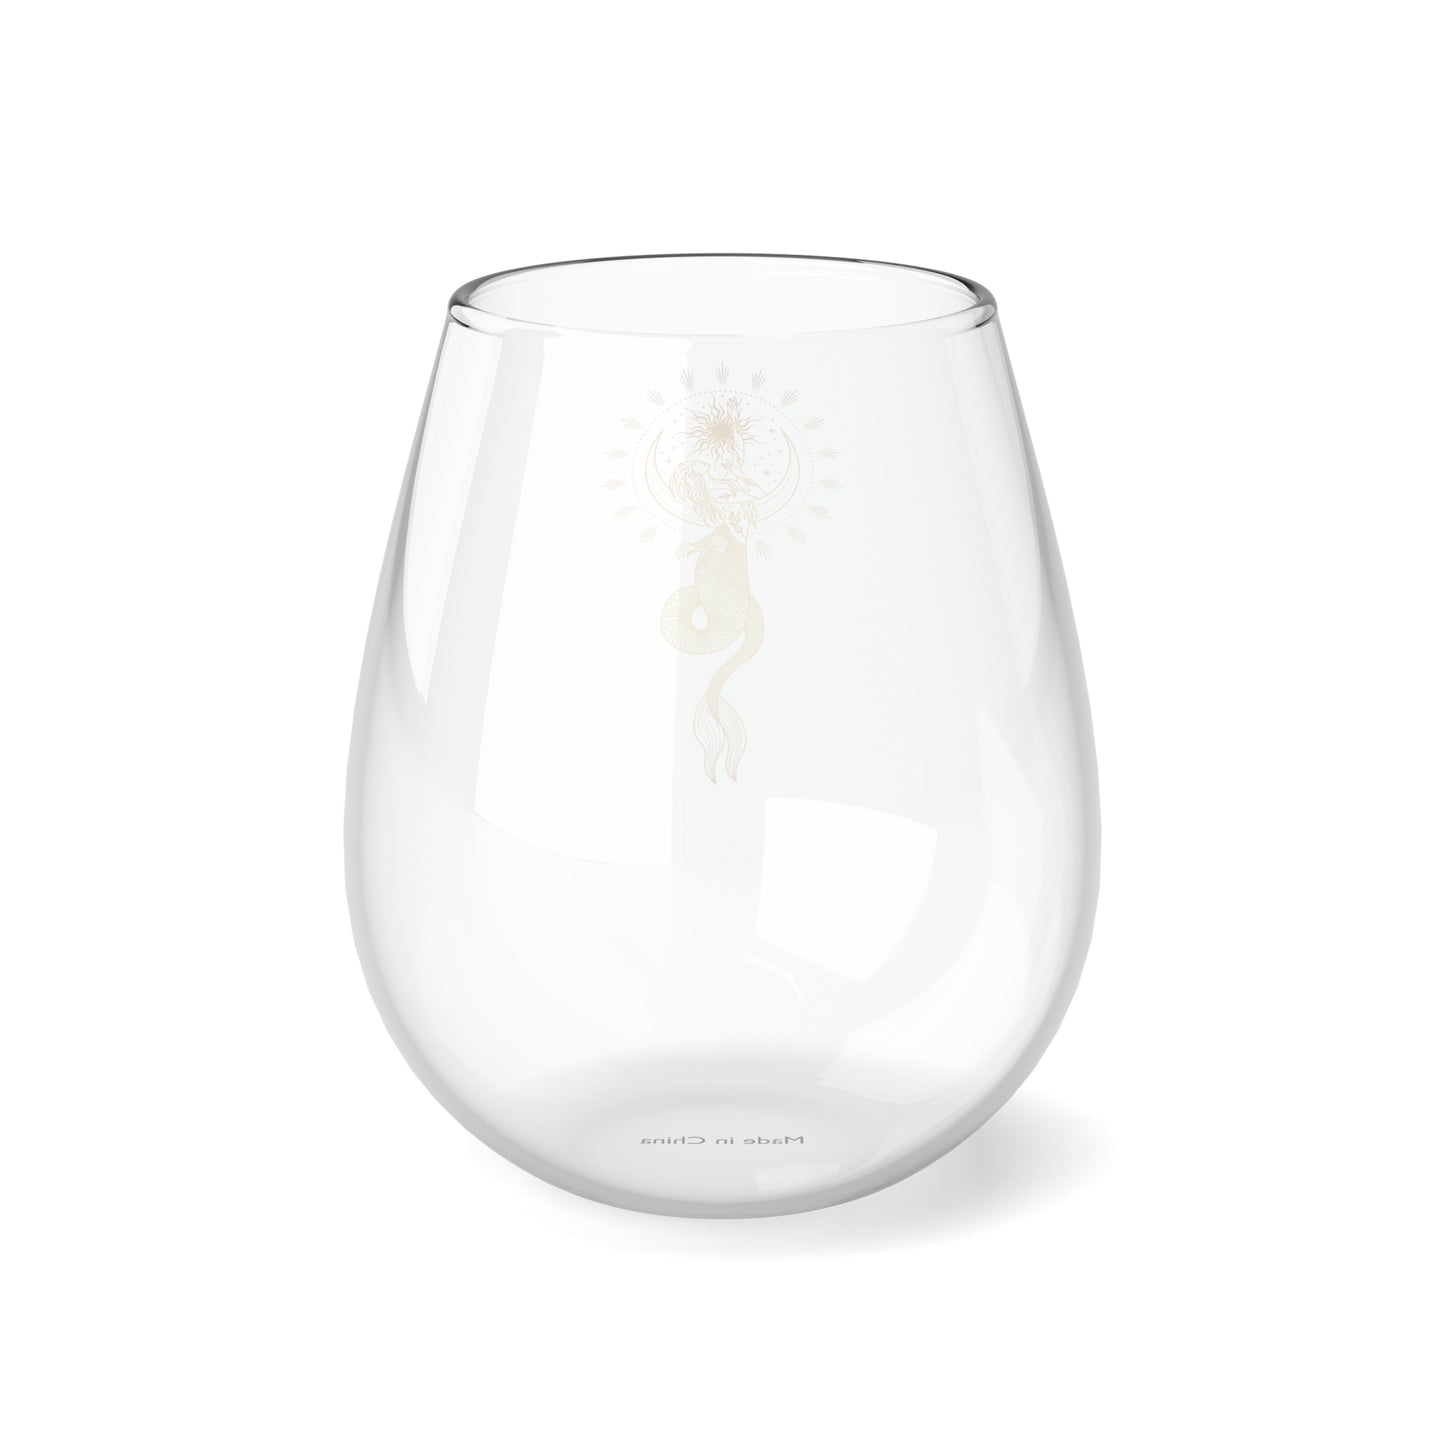 Dancing Zodiac Girl - Capricorn Stemless Wine Glass, 11.75oz